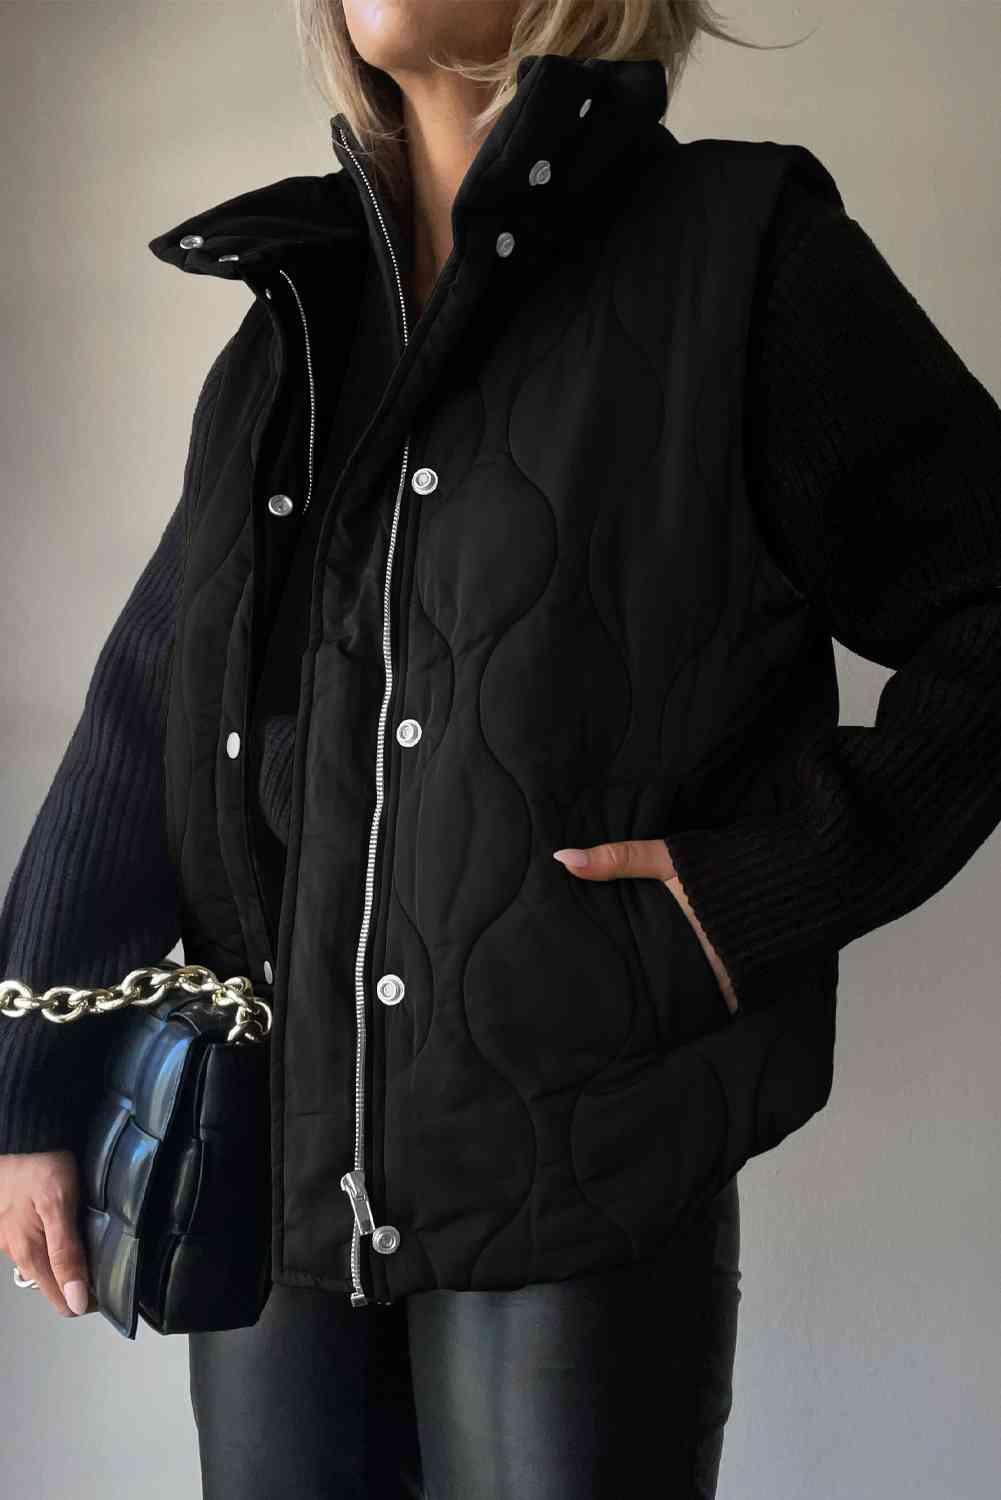 a woman wearing a black jacket and black pants